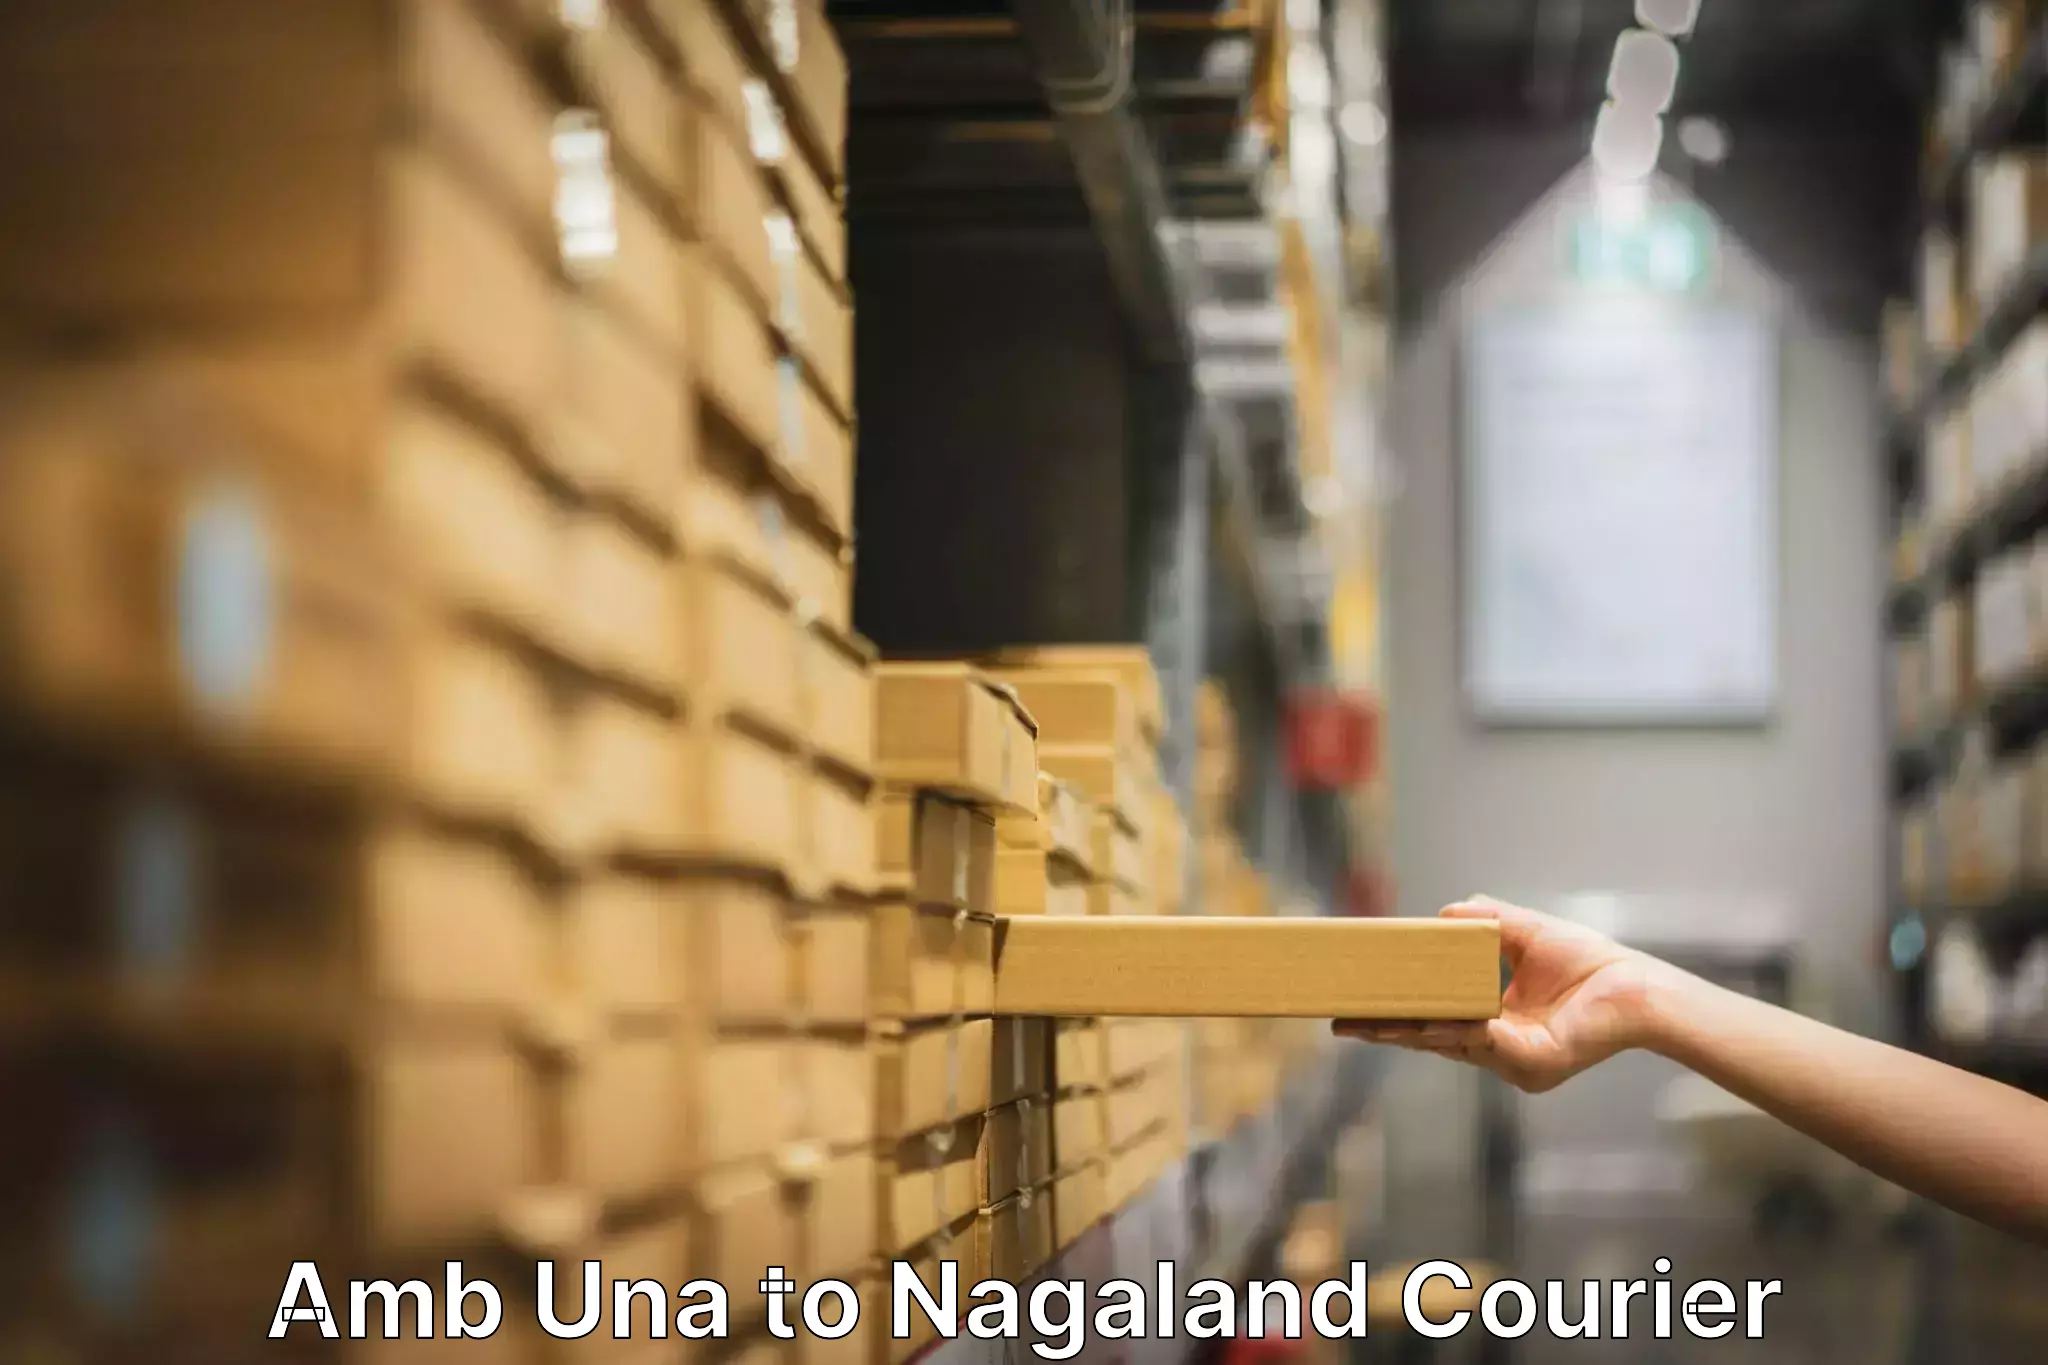 Trusted moving company Amb Una to Nagaland